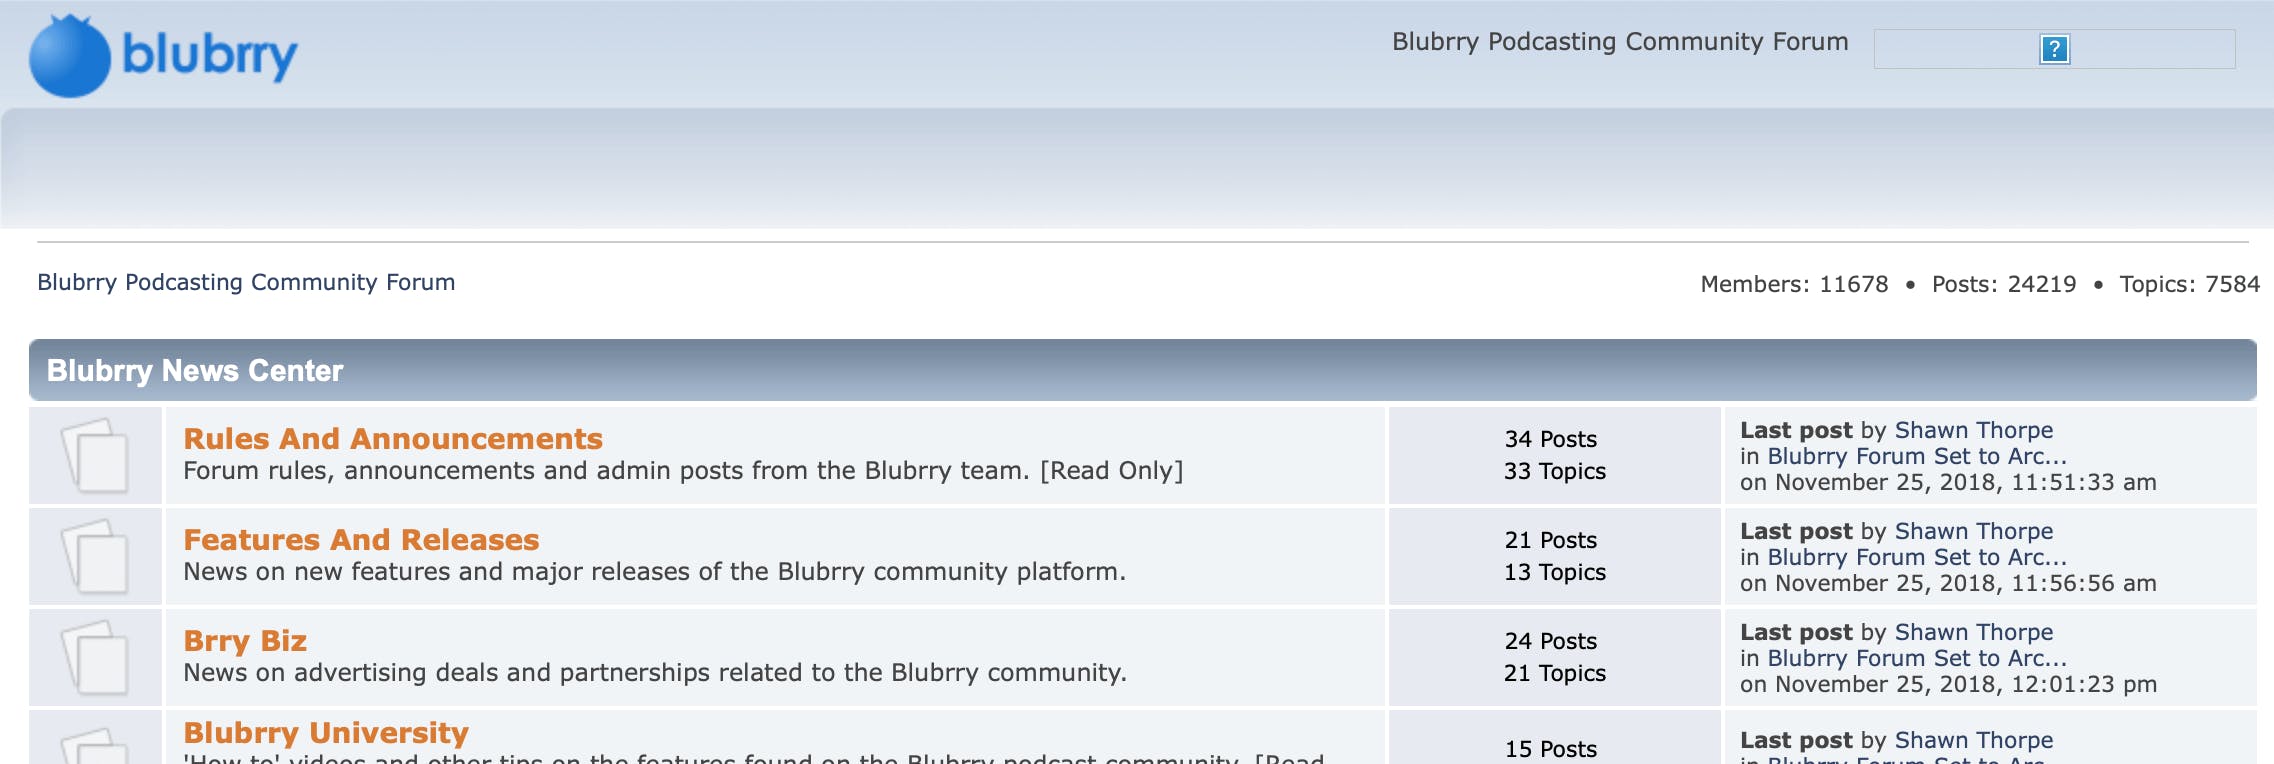 Blubrry Podcasting Community Forum